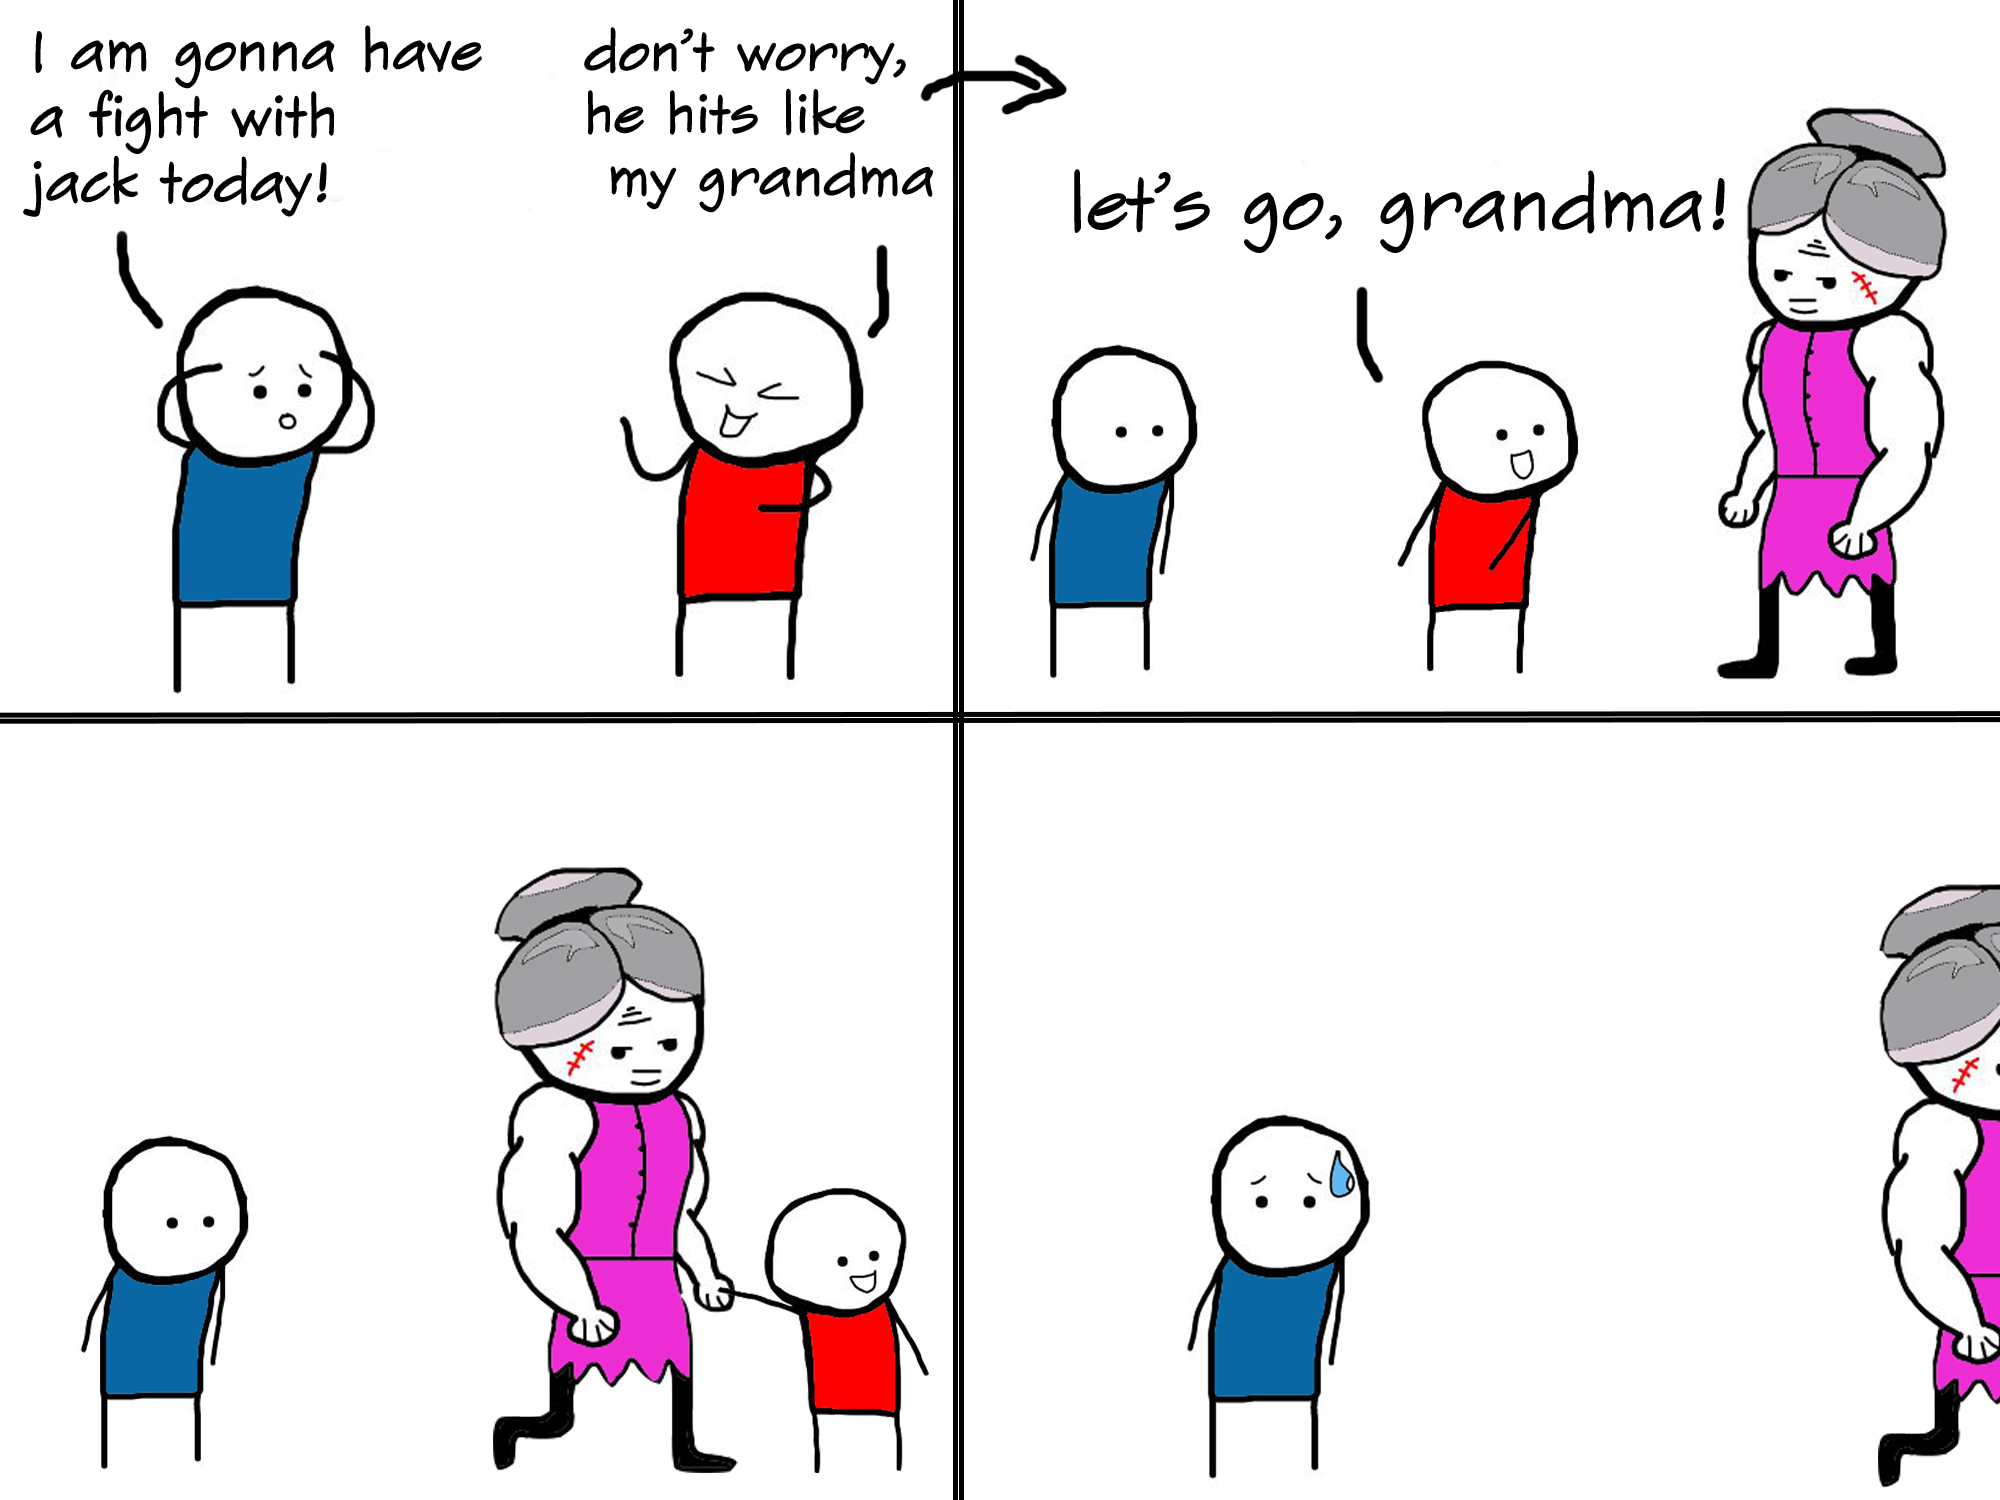 Bad ass grandma